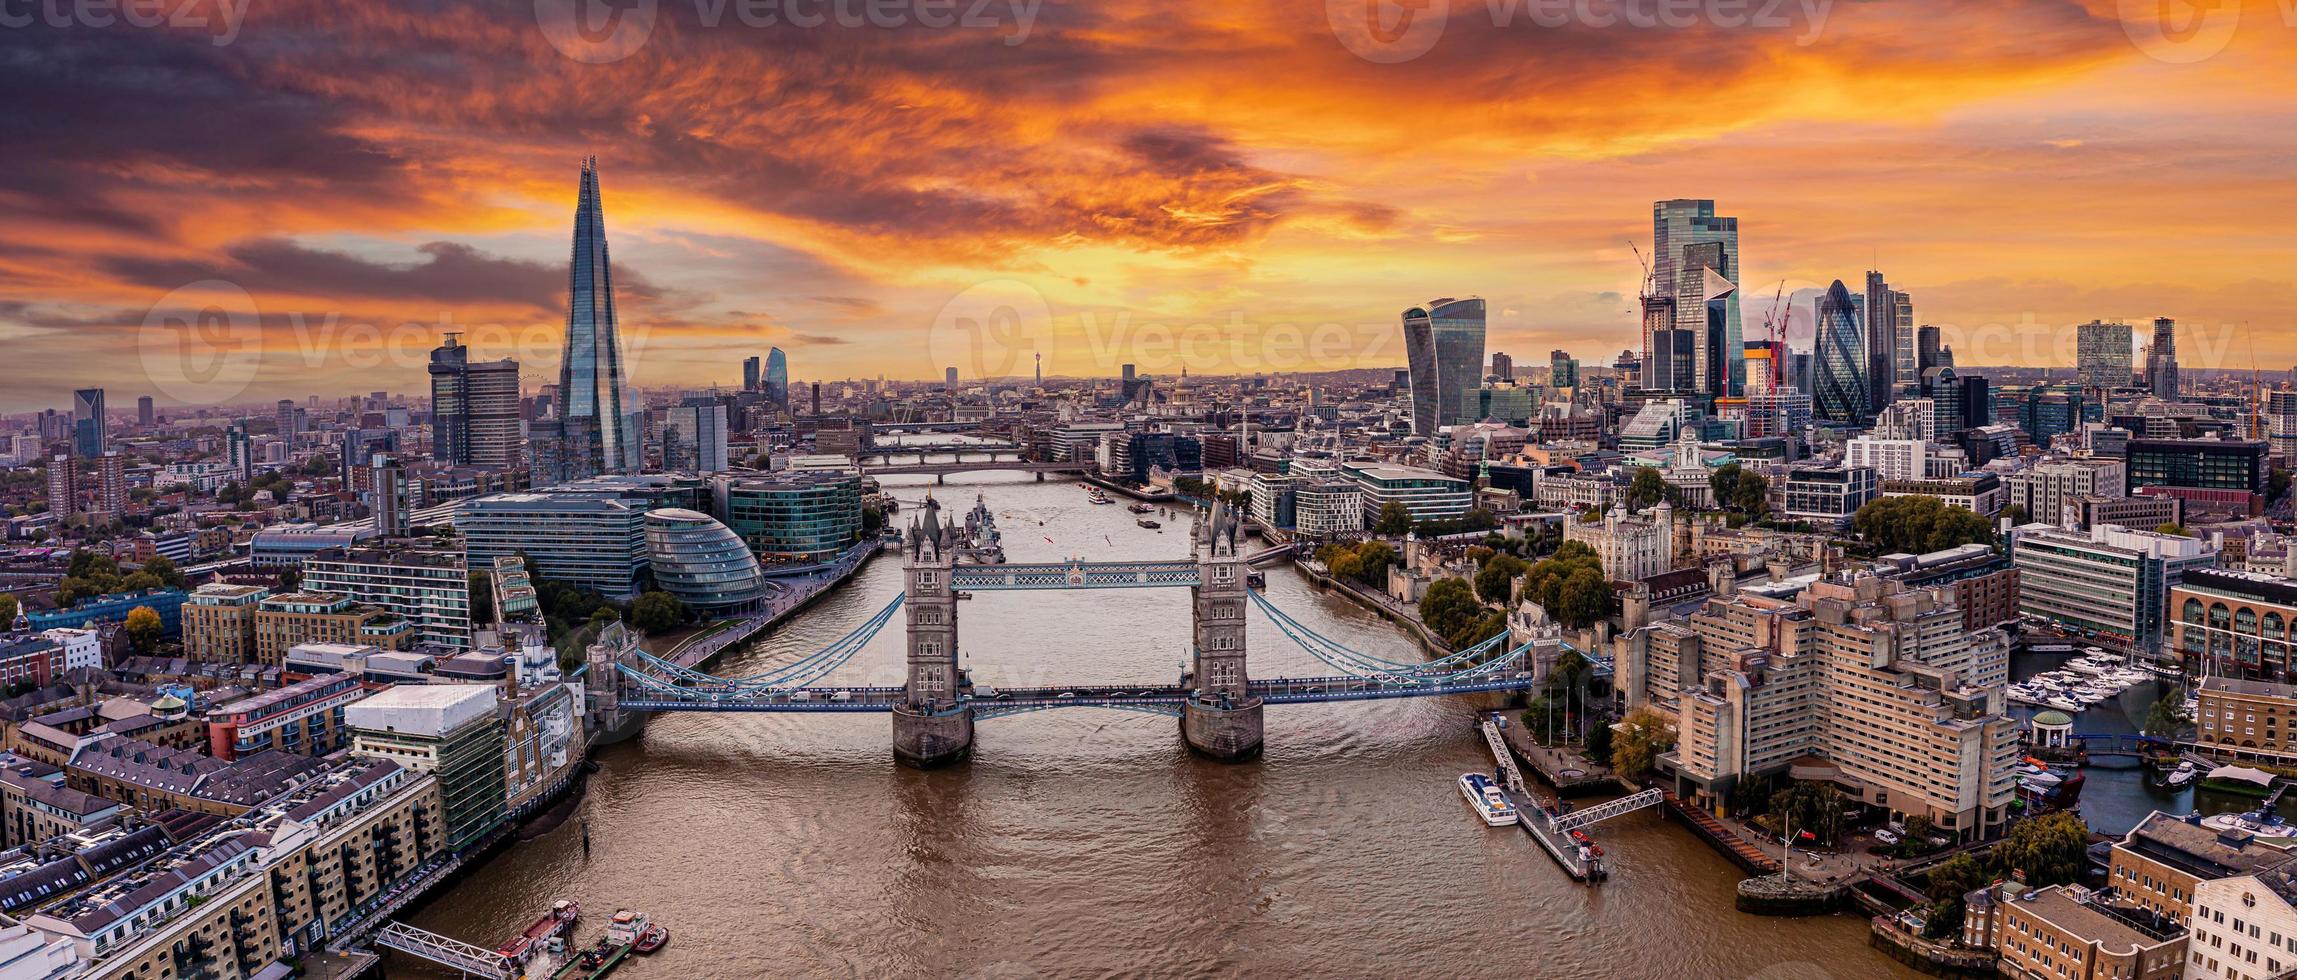 vista panorámica aérea del paisaje urbano del puente de la torre de Londres foto